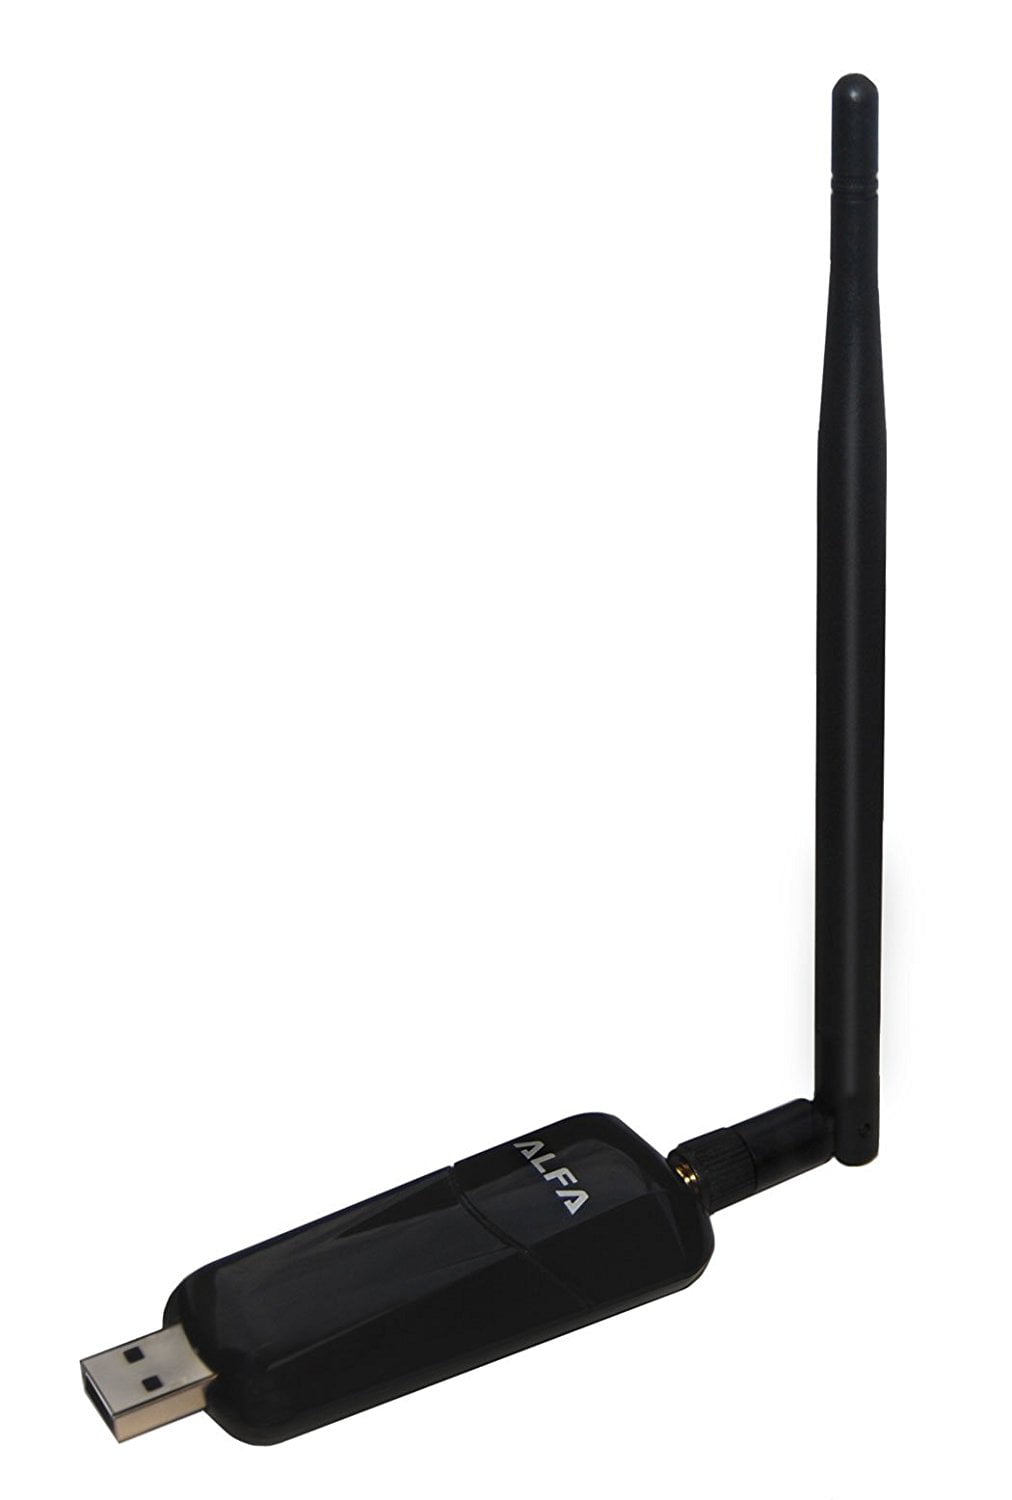 1000MW Wifi Network Long Range 802.11 B/N/G 300M USB Wireless Adapter+2x Antenna 